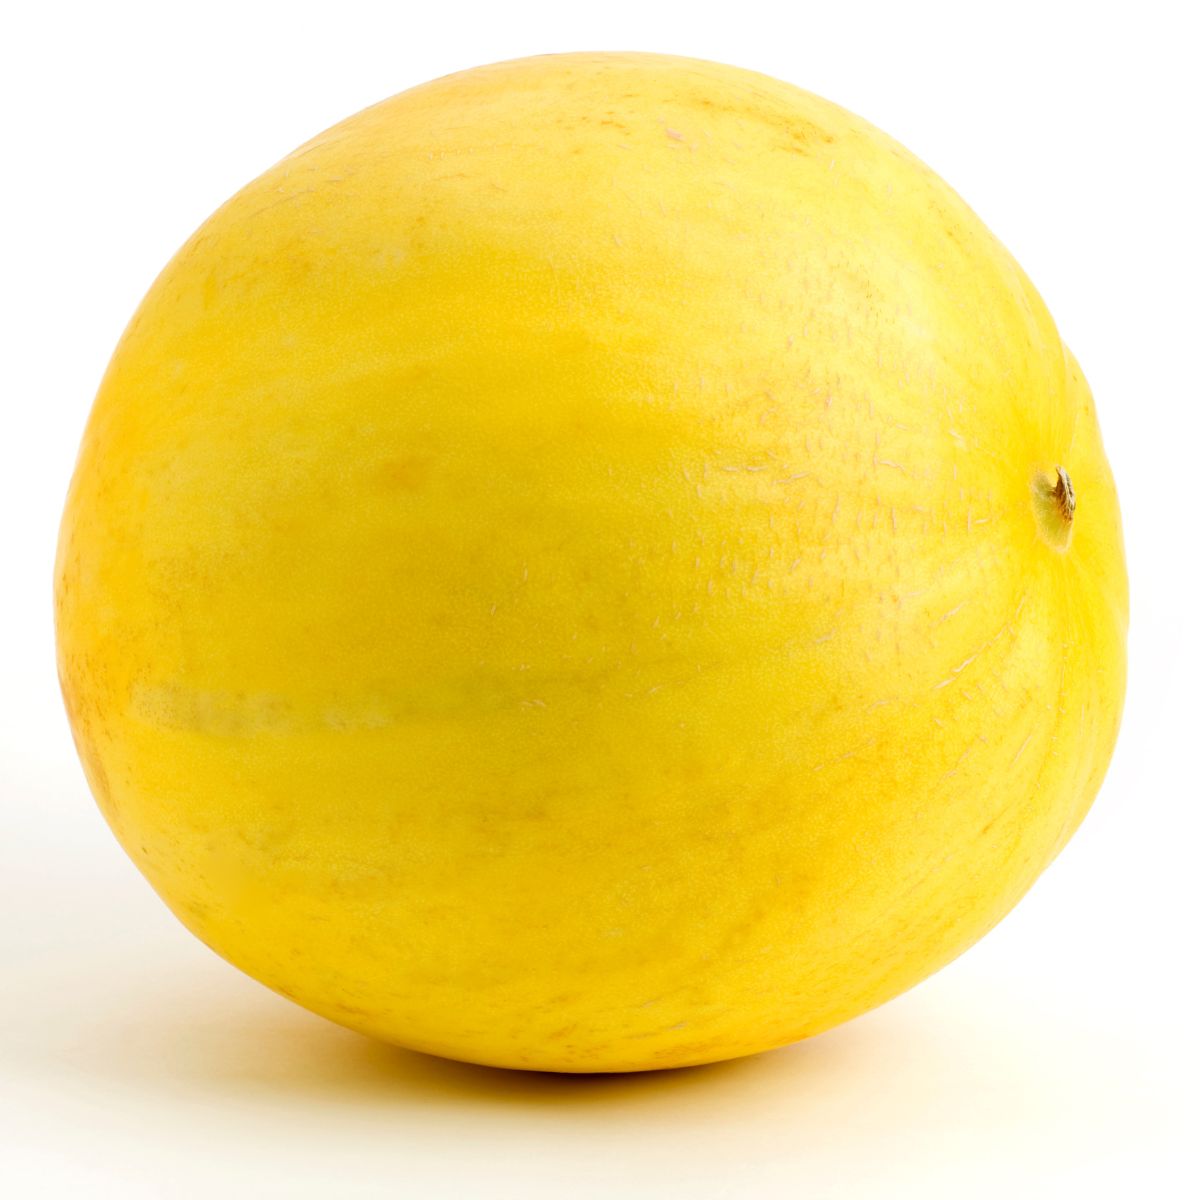 A yellow honeydew melon. 